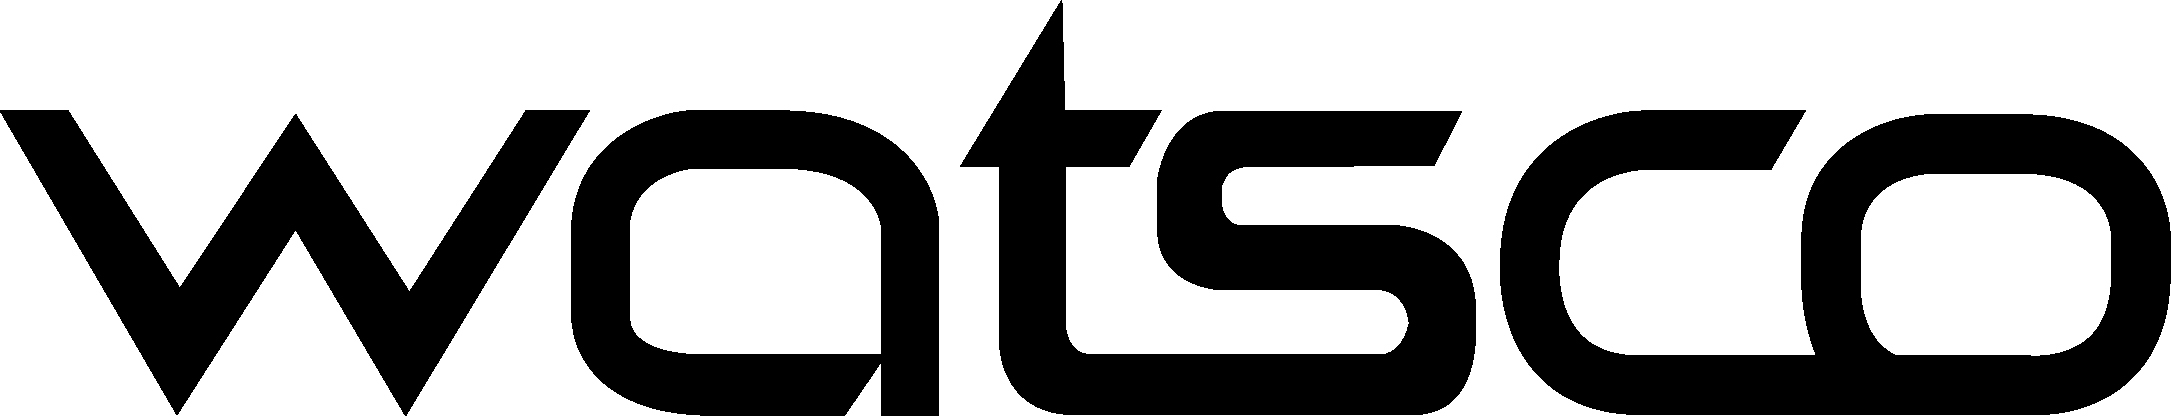 Watsco Logo.JPG